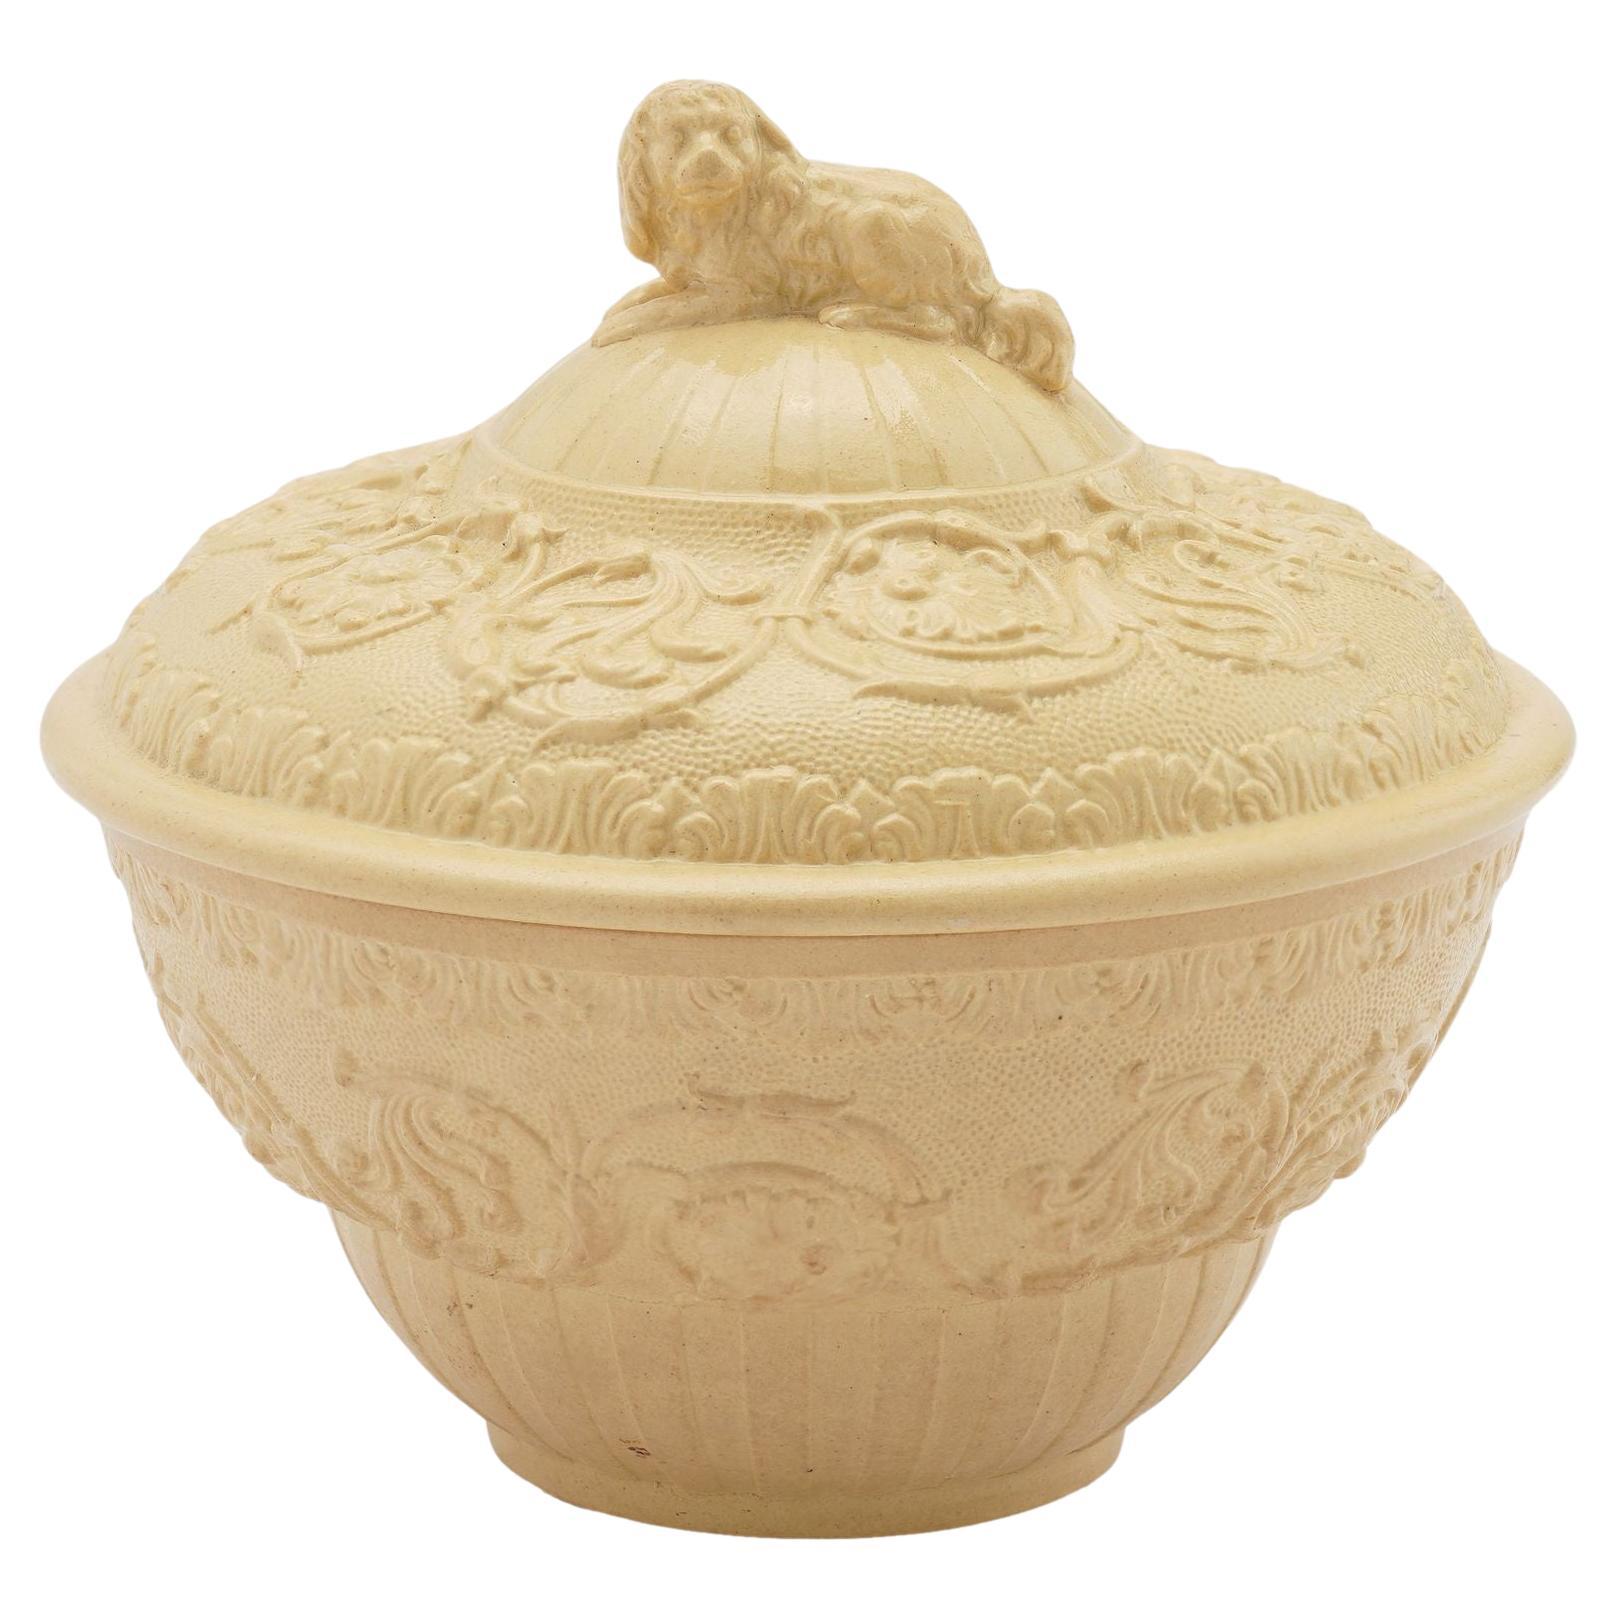 Wedgwood Caneware ceramic sugar bowl, c. 1815-20 For Sale